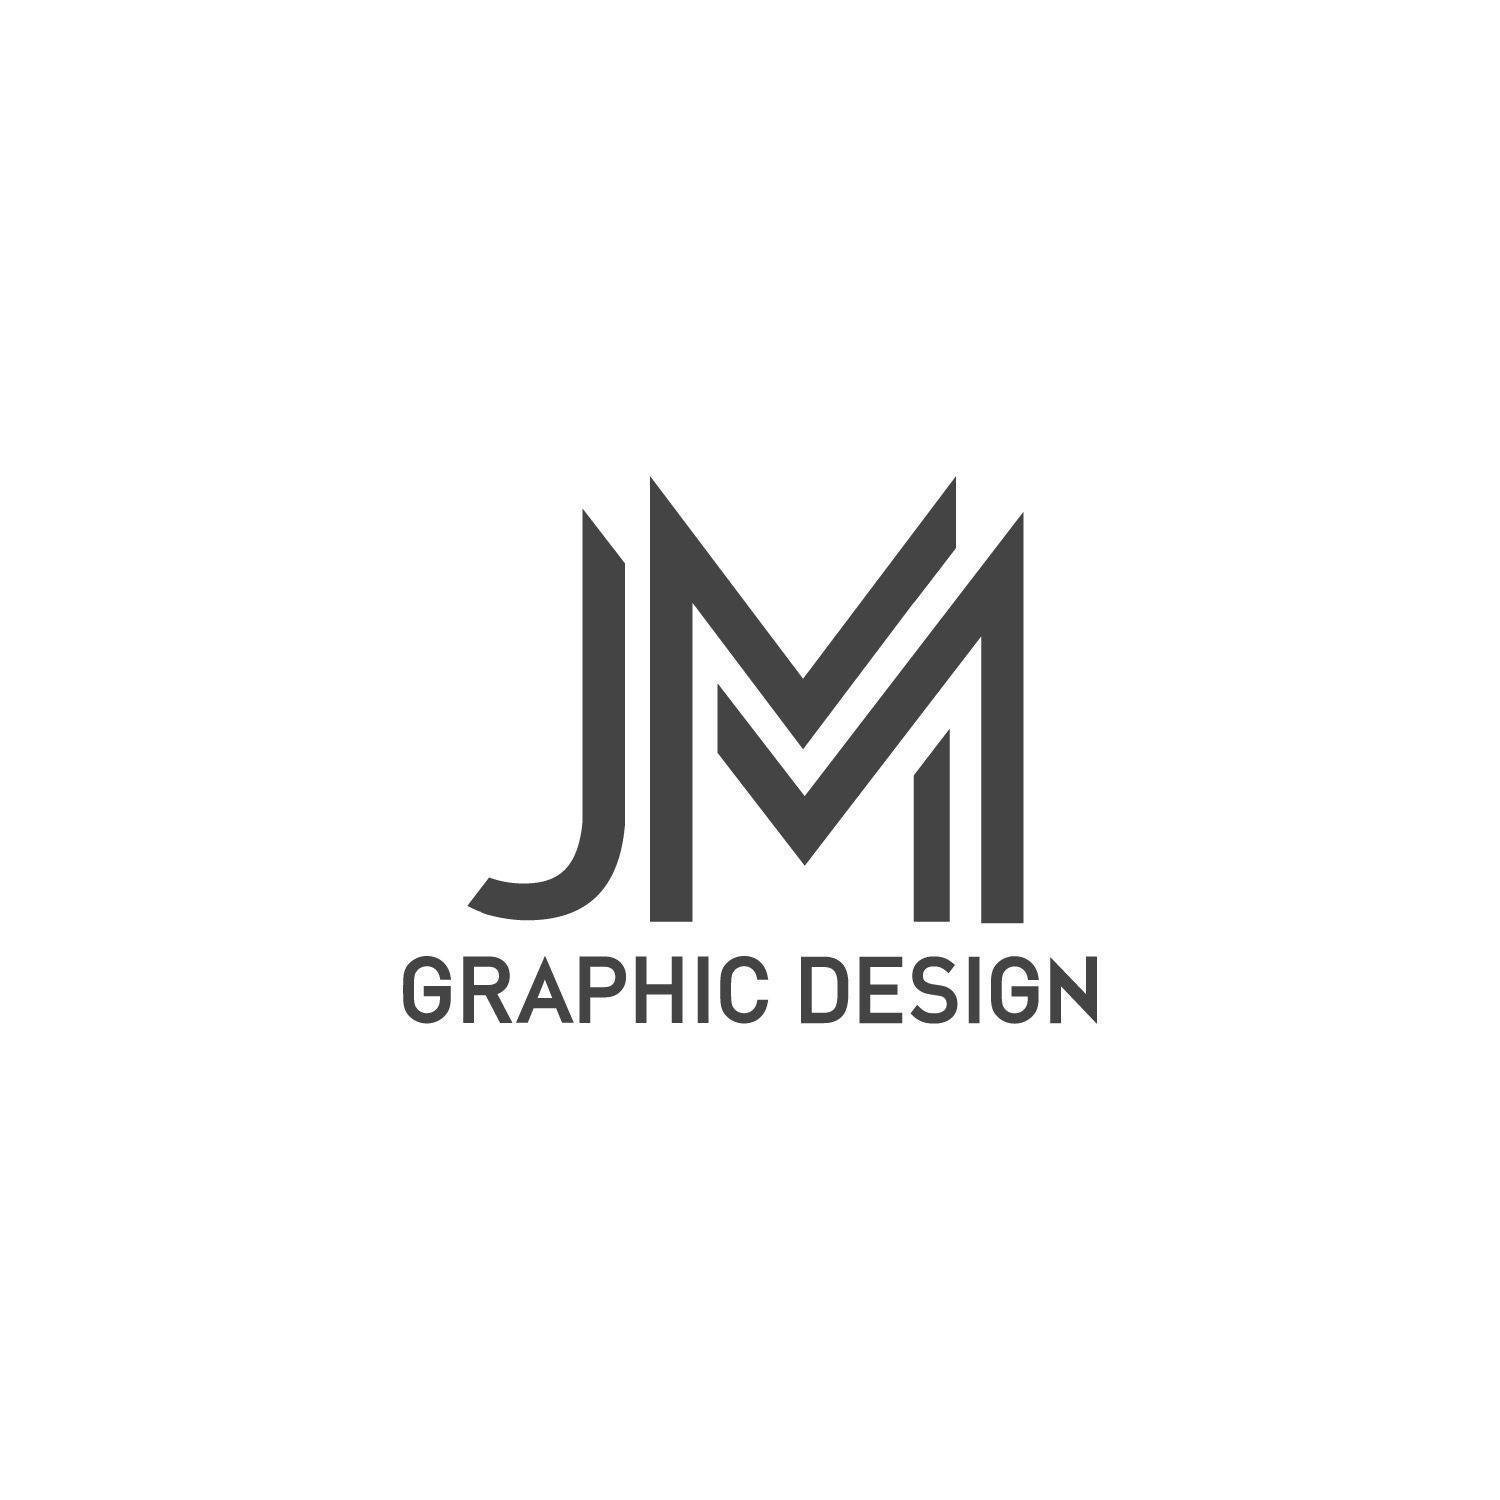 JM Logo - Graphic Designer London. Logo Design & Web Design